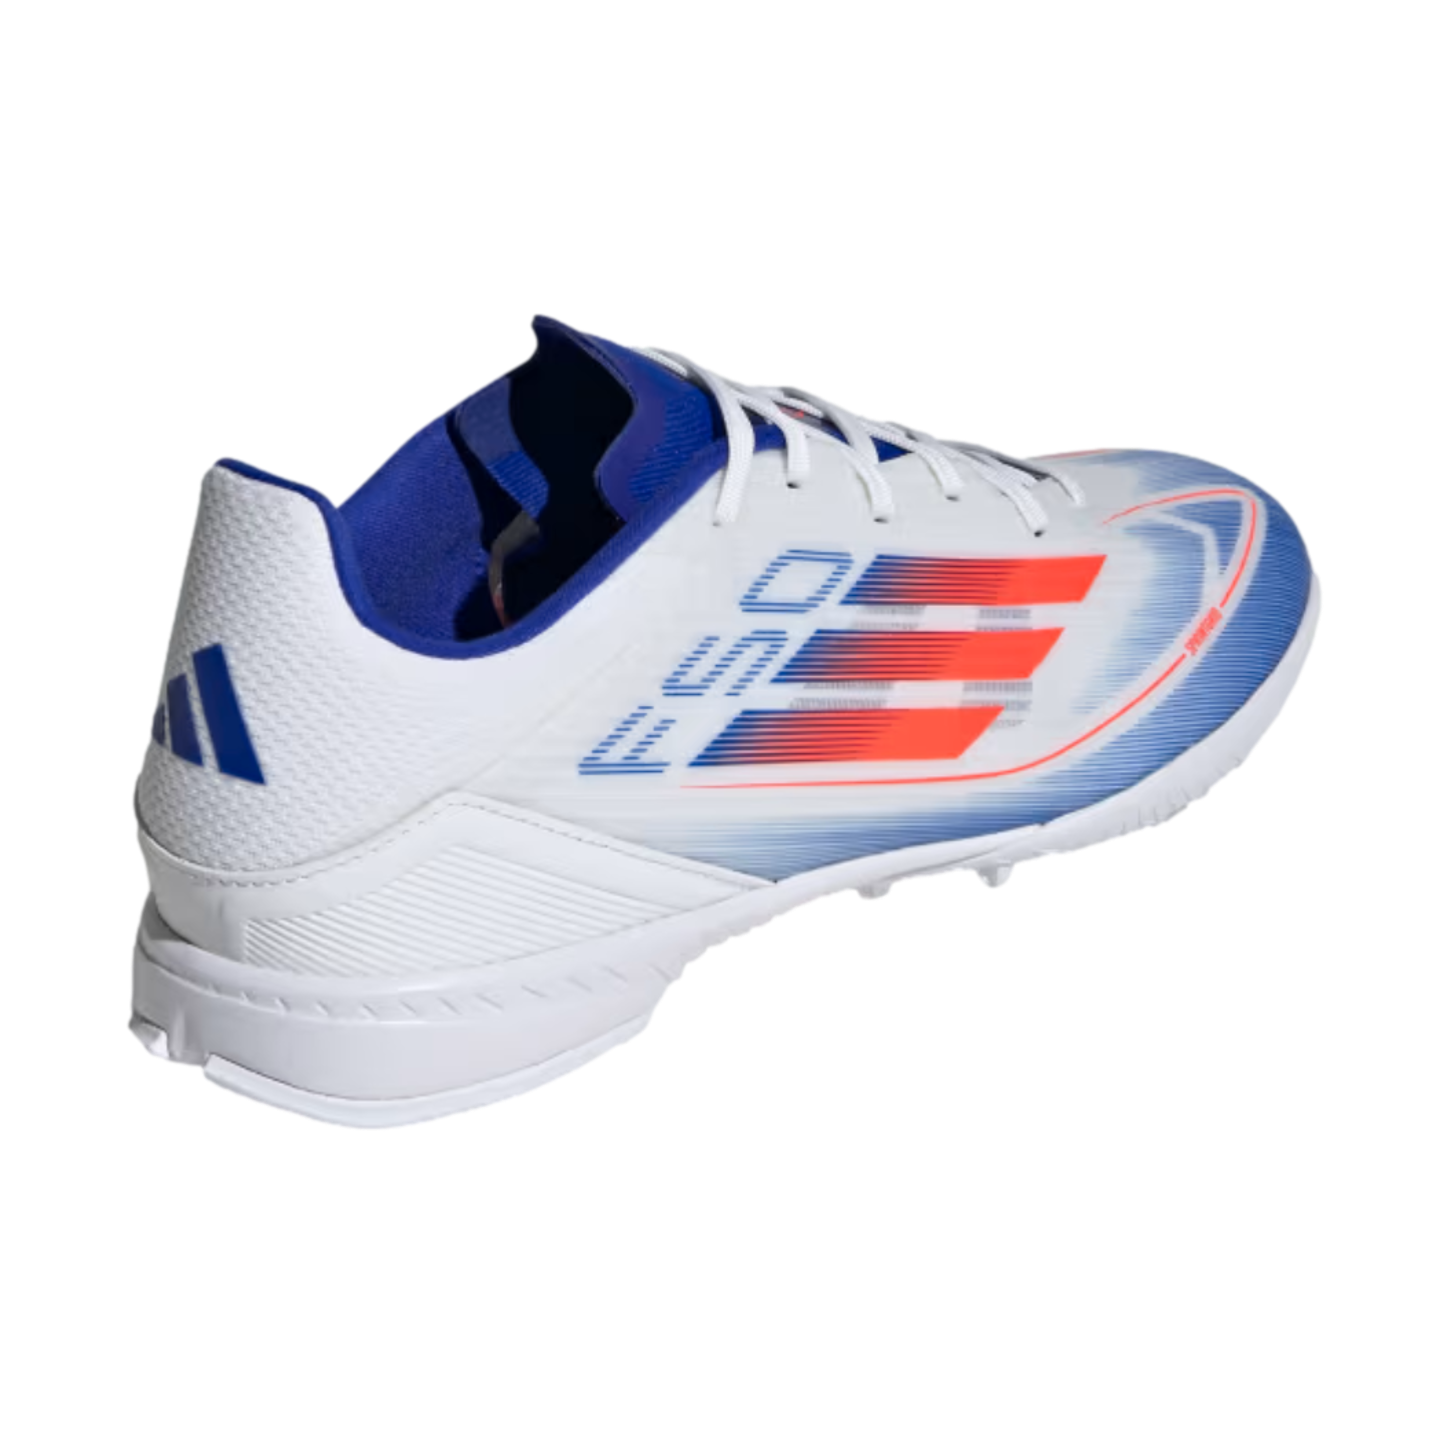 Adidas F50 League Turf Shoes